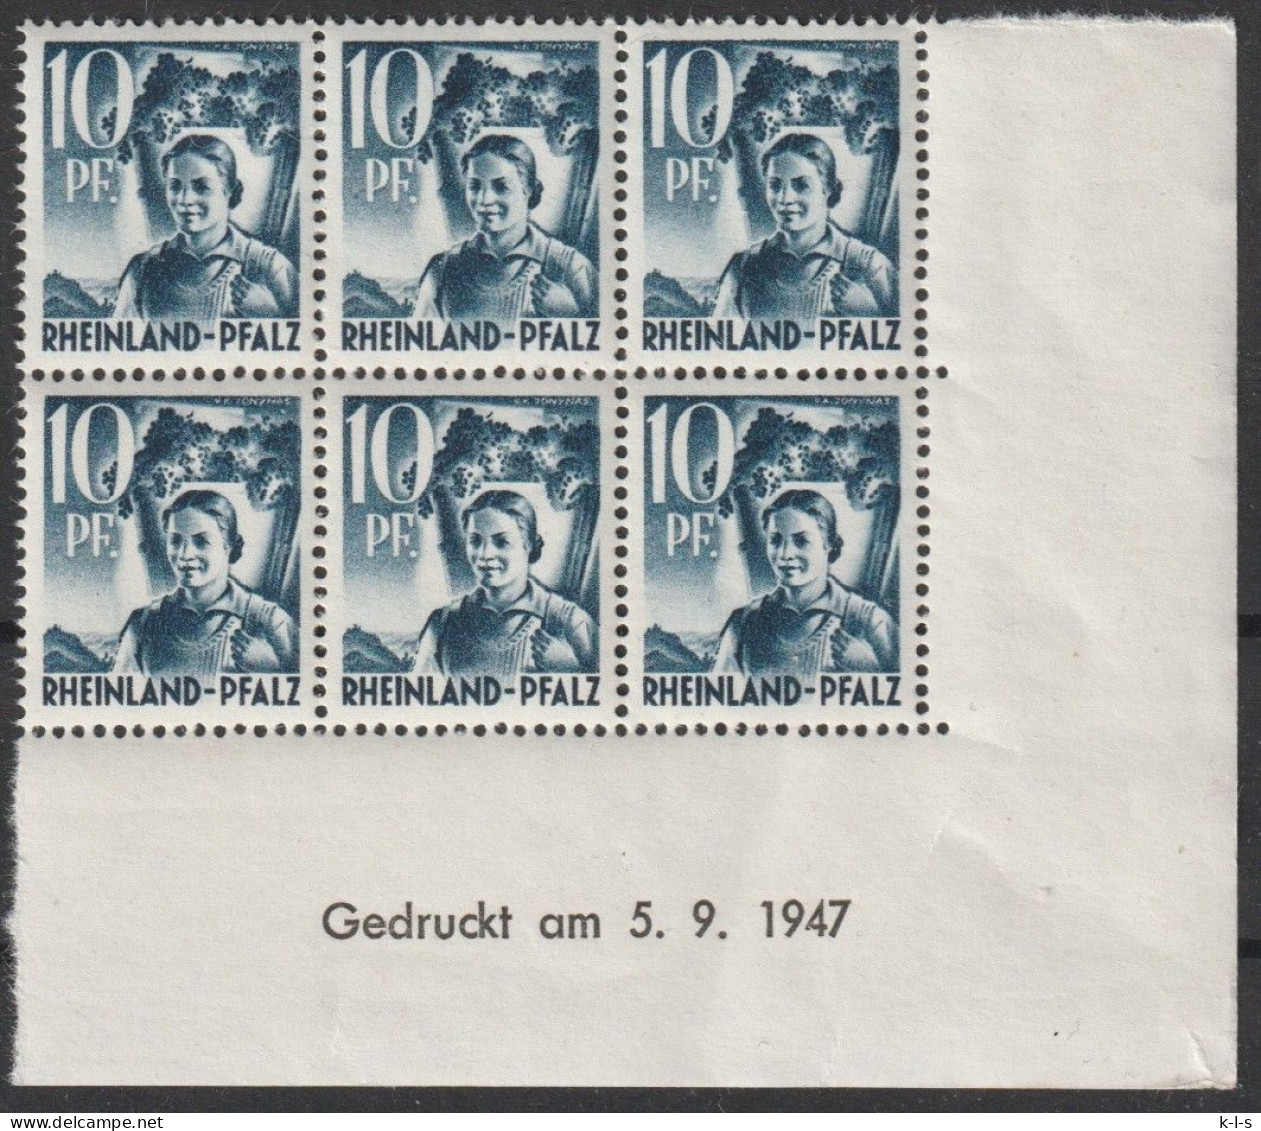 Franz. Zone- Rheinland-Pfalz: 1948, Mi. Nr. 3 Yv Br U, Freimarke:  10 Pfg. Winzerin, Druckdatum 5.9.1957,  **/MNH - Rheinland-Pfalz